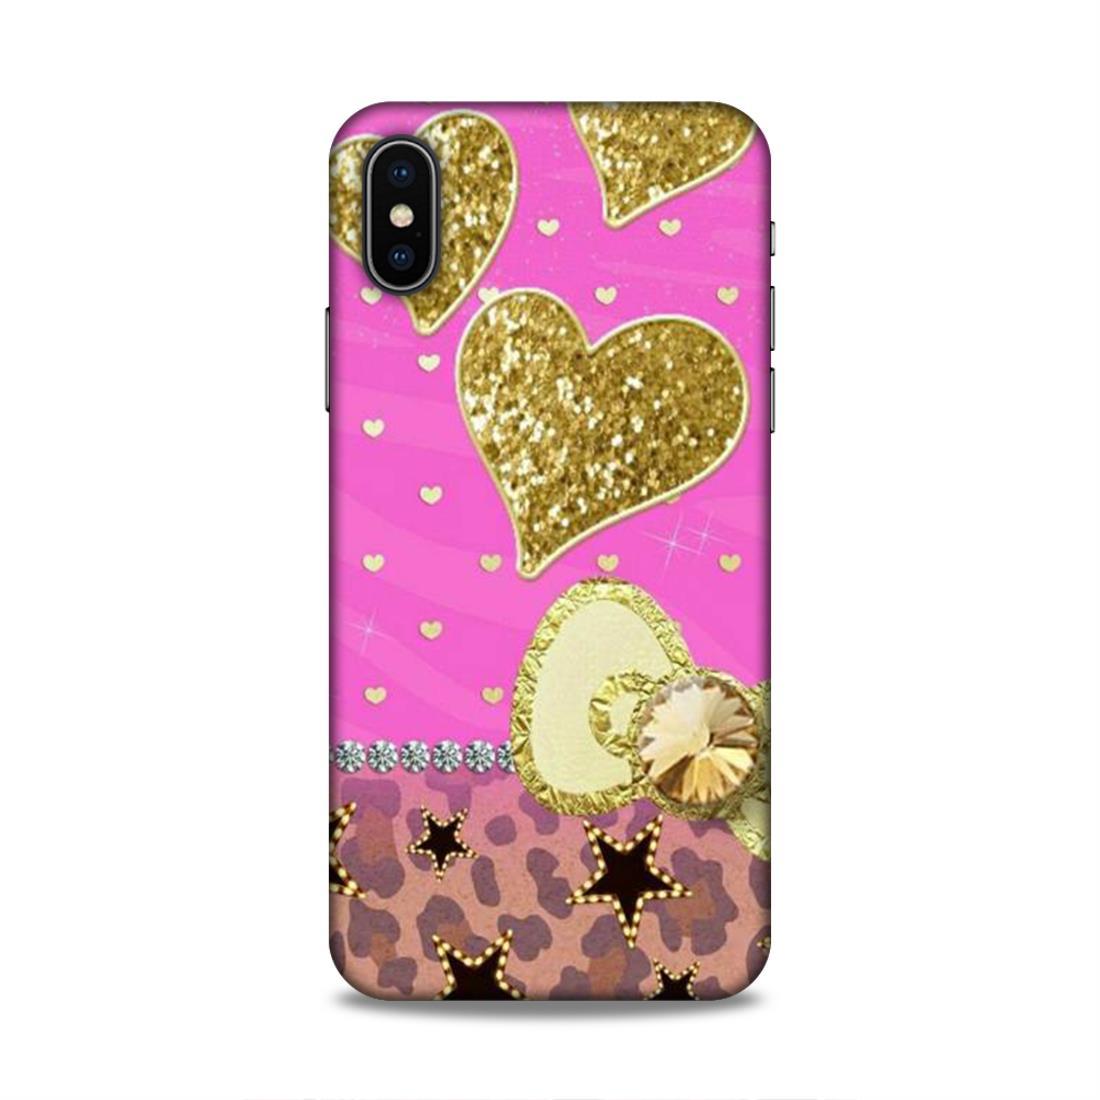 Cute Pink Heart iPhone X Phone Case Cover